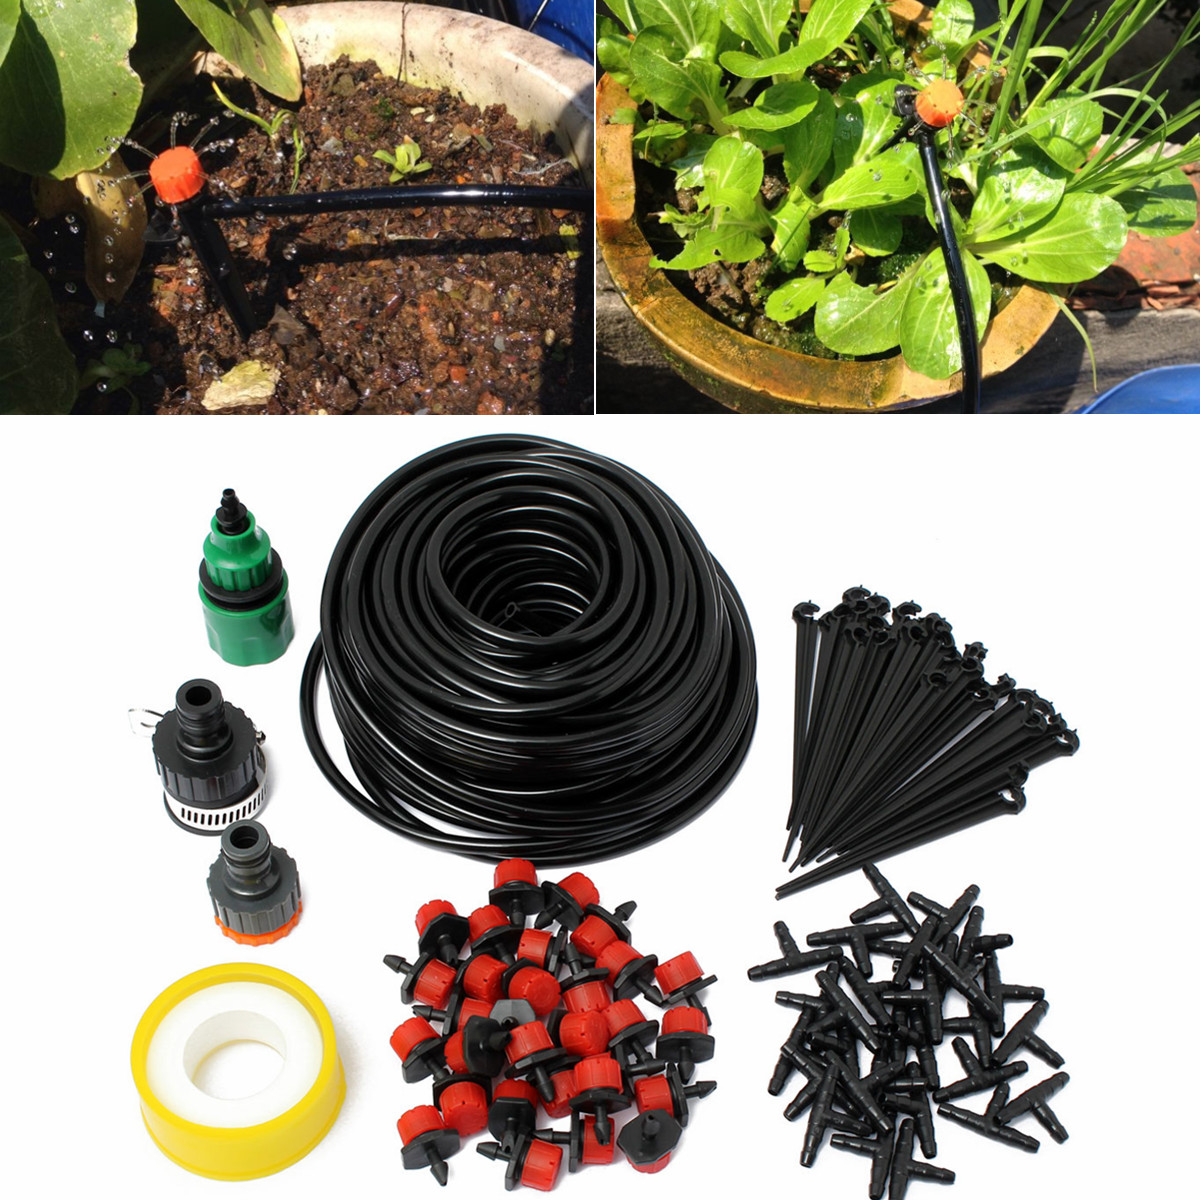 

95pcs 82ft Micro Drip Irrigation System Plant Self Watering DIY Garden Hose